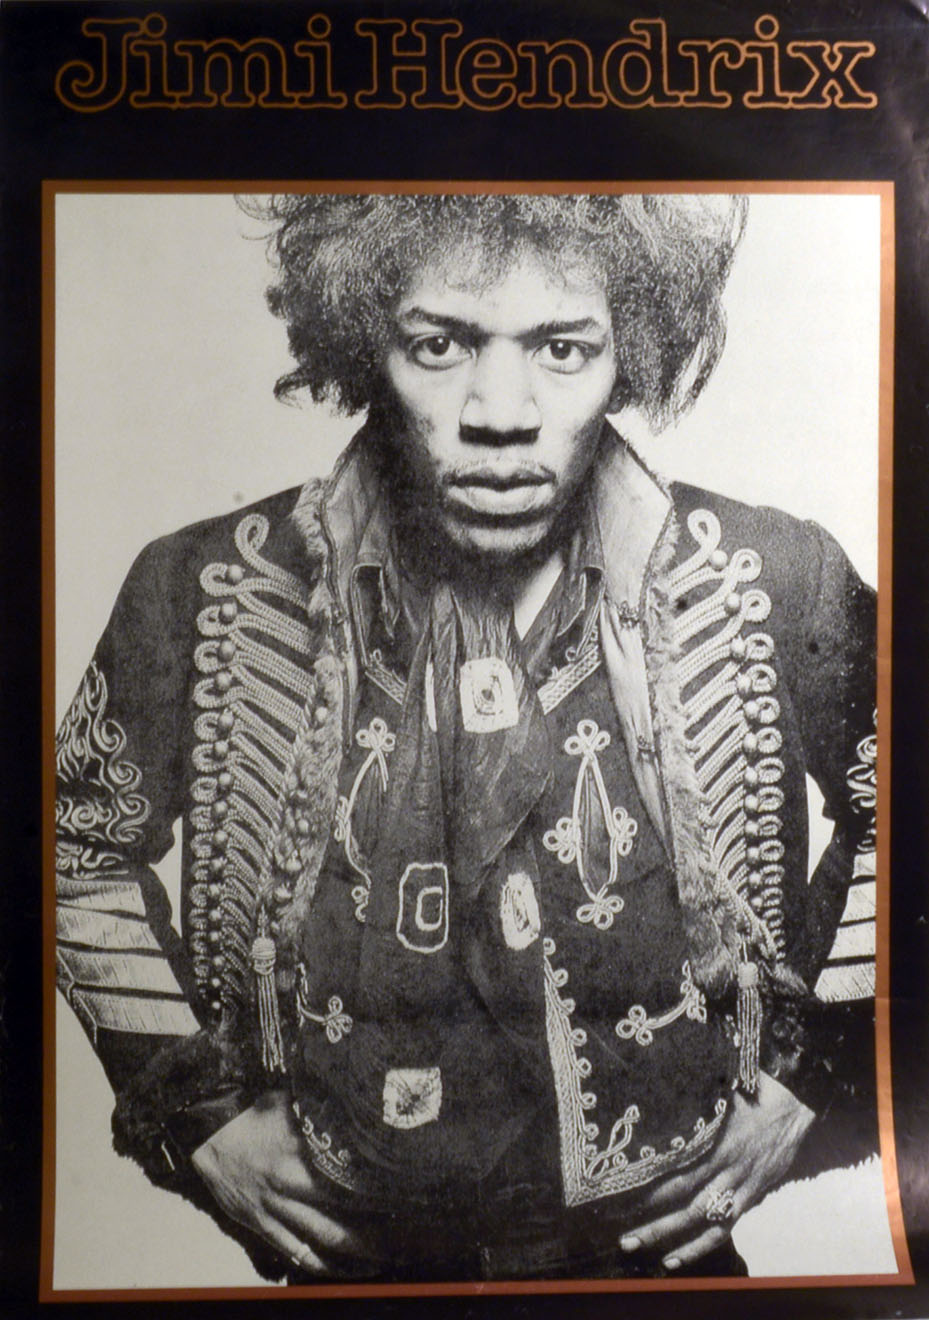 ABOUT EDWARD KURSTAK Vintages Poster  by  Jimi Hendrix